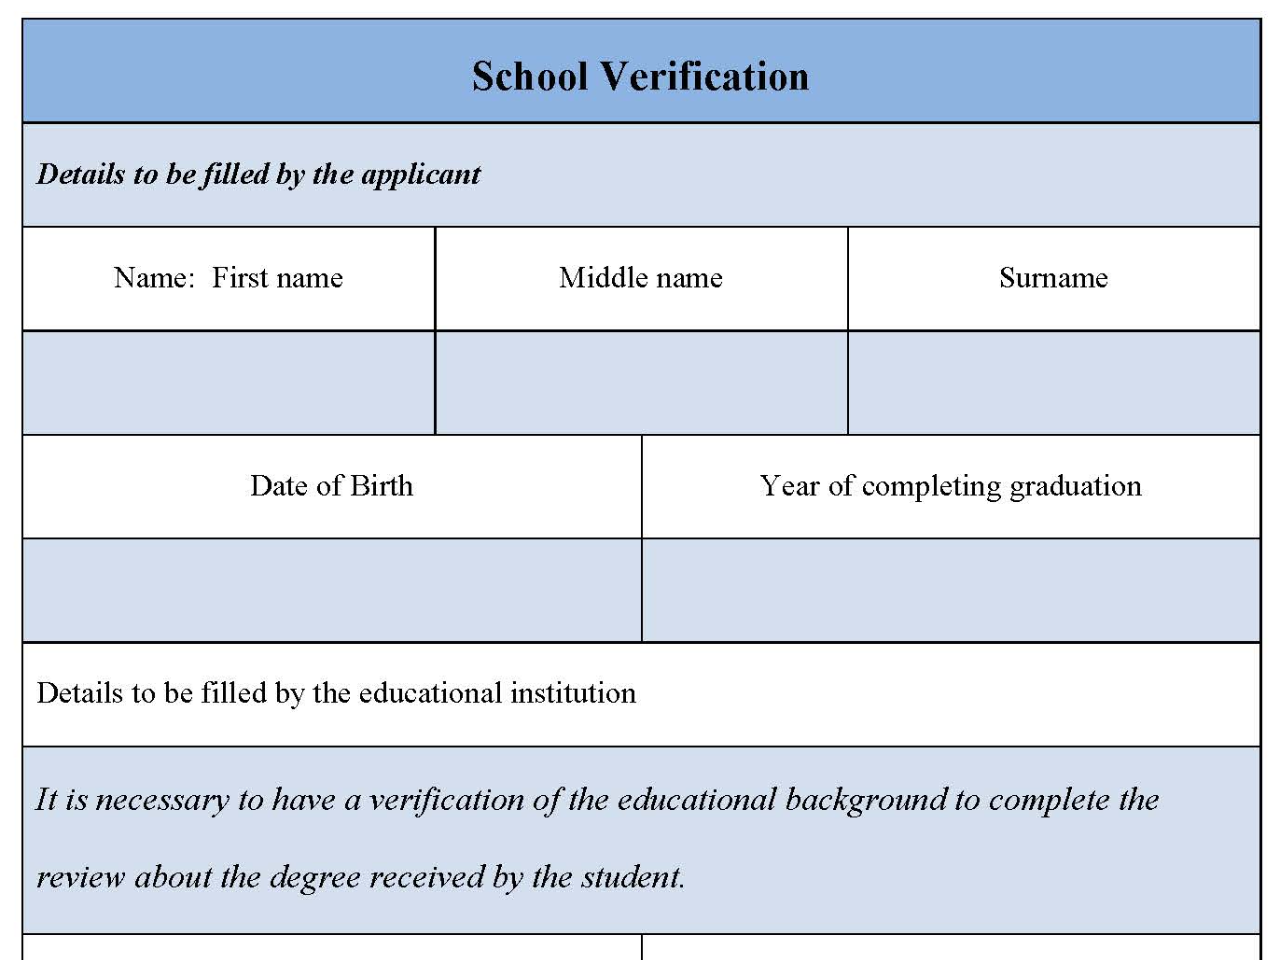 School Verification Form